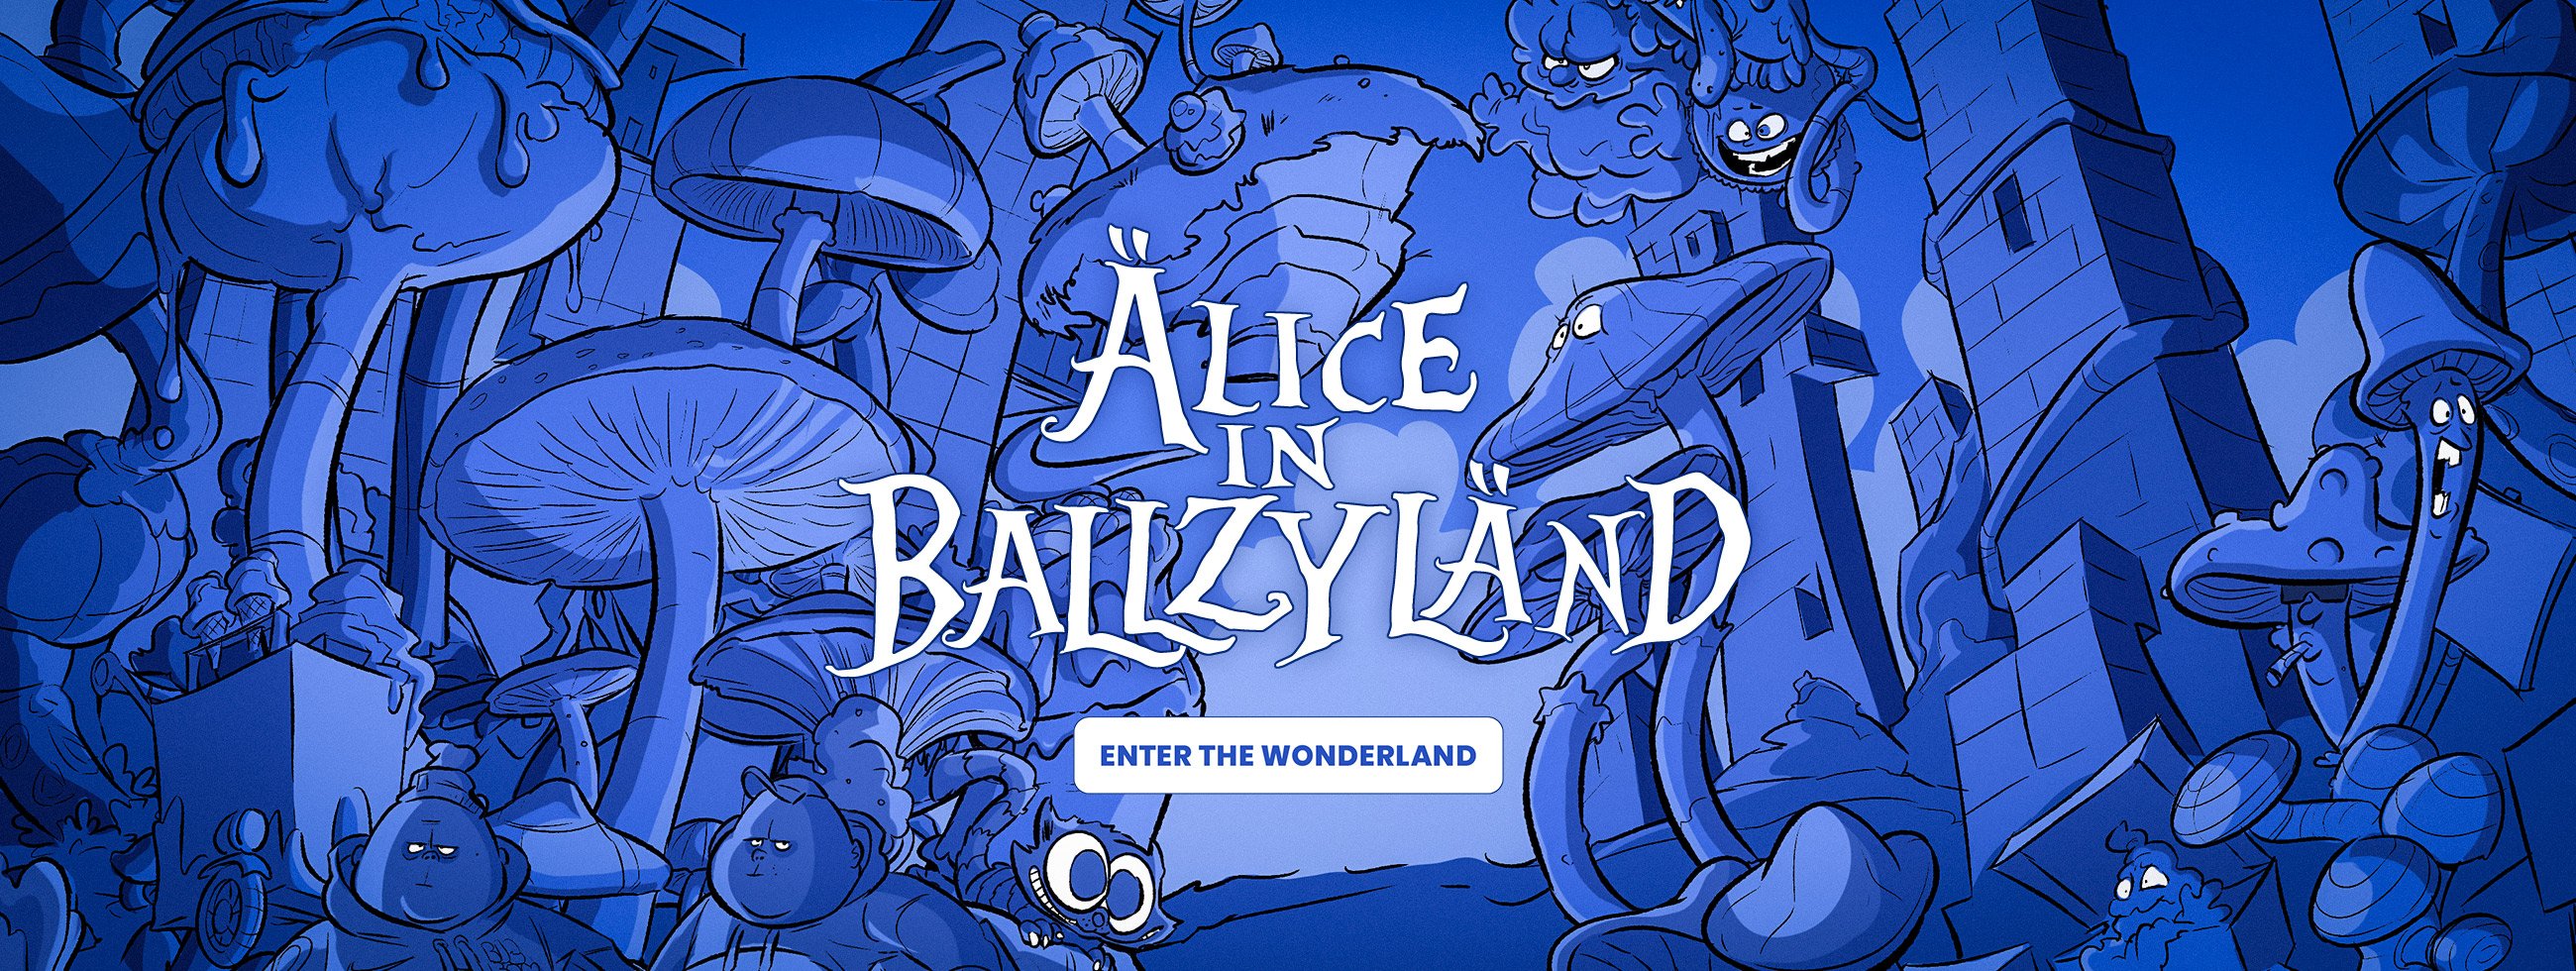 Alice in Ballzyland - FI